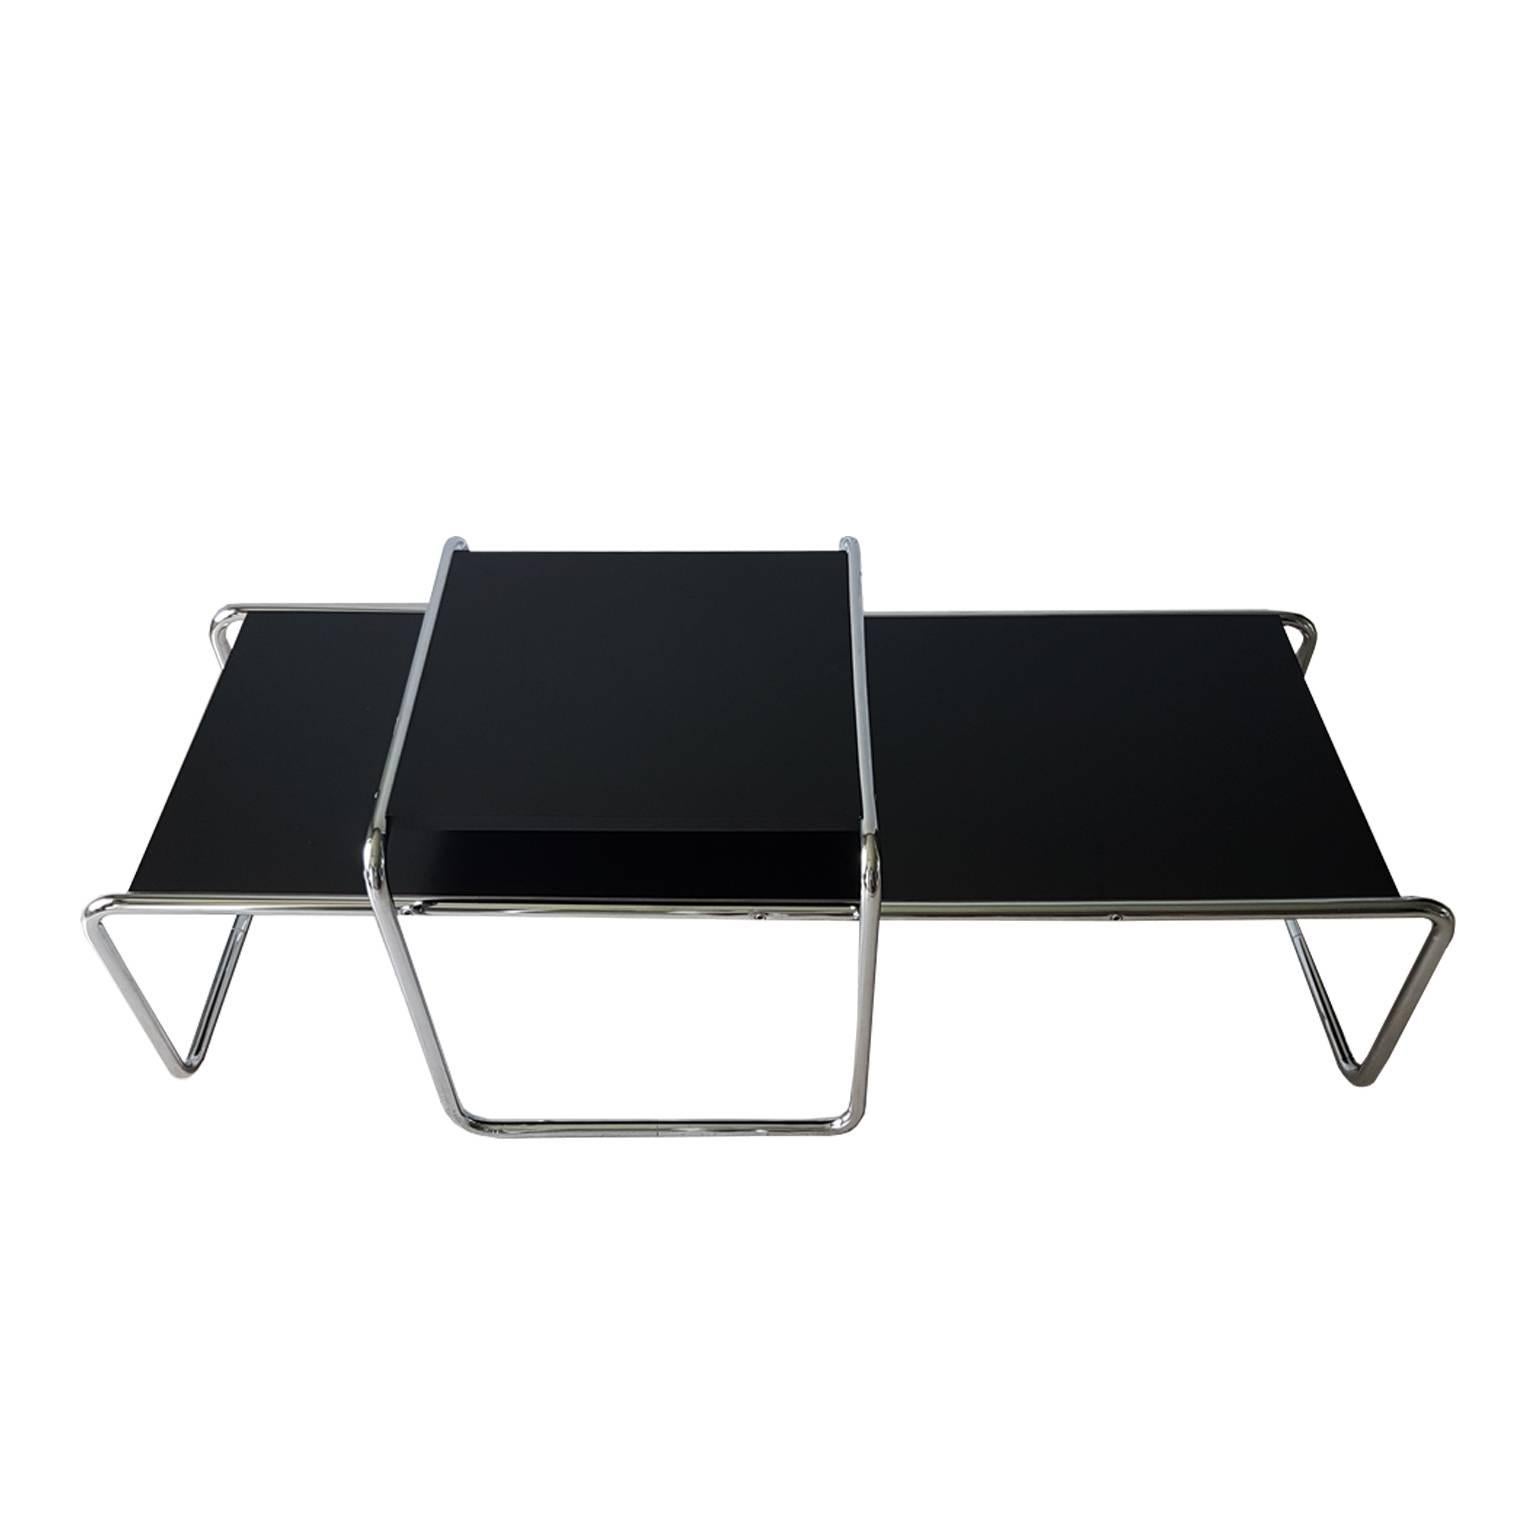 Italian Marcel Breuer Coffee Table in Tubular Steel and Black Laminate Top Bauhaus style